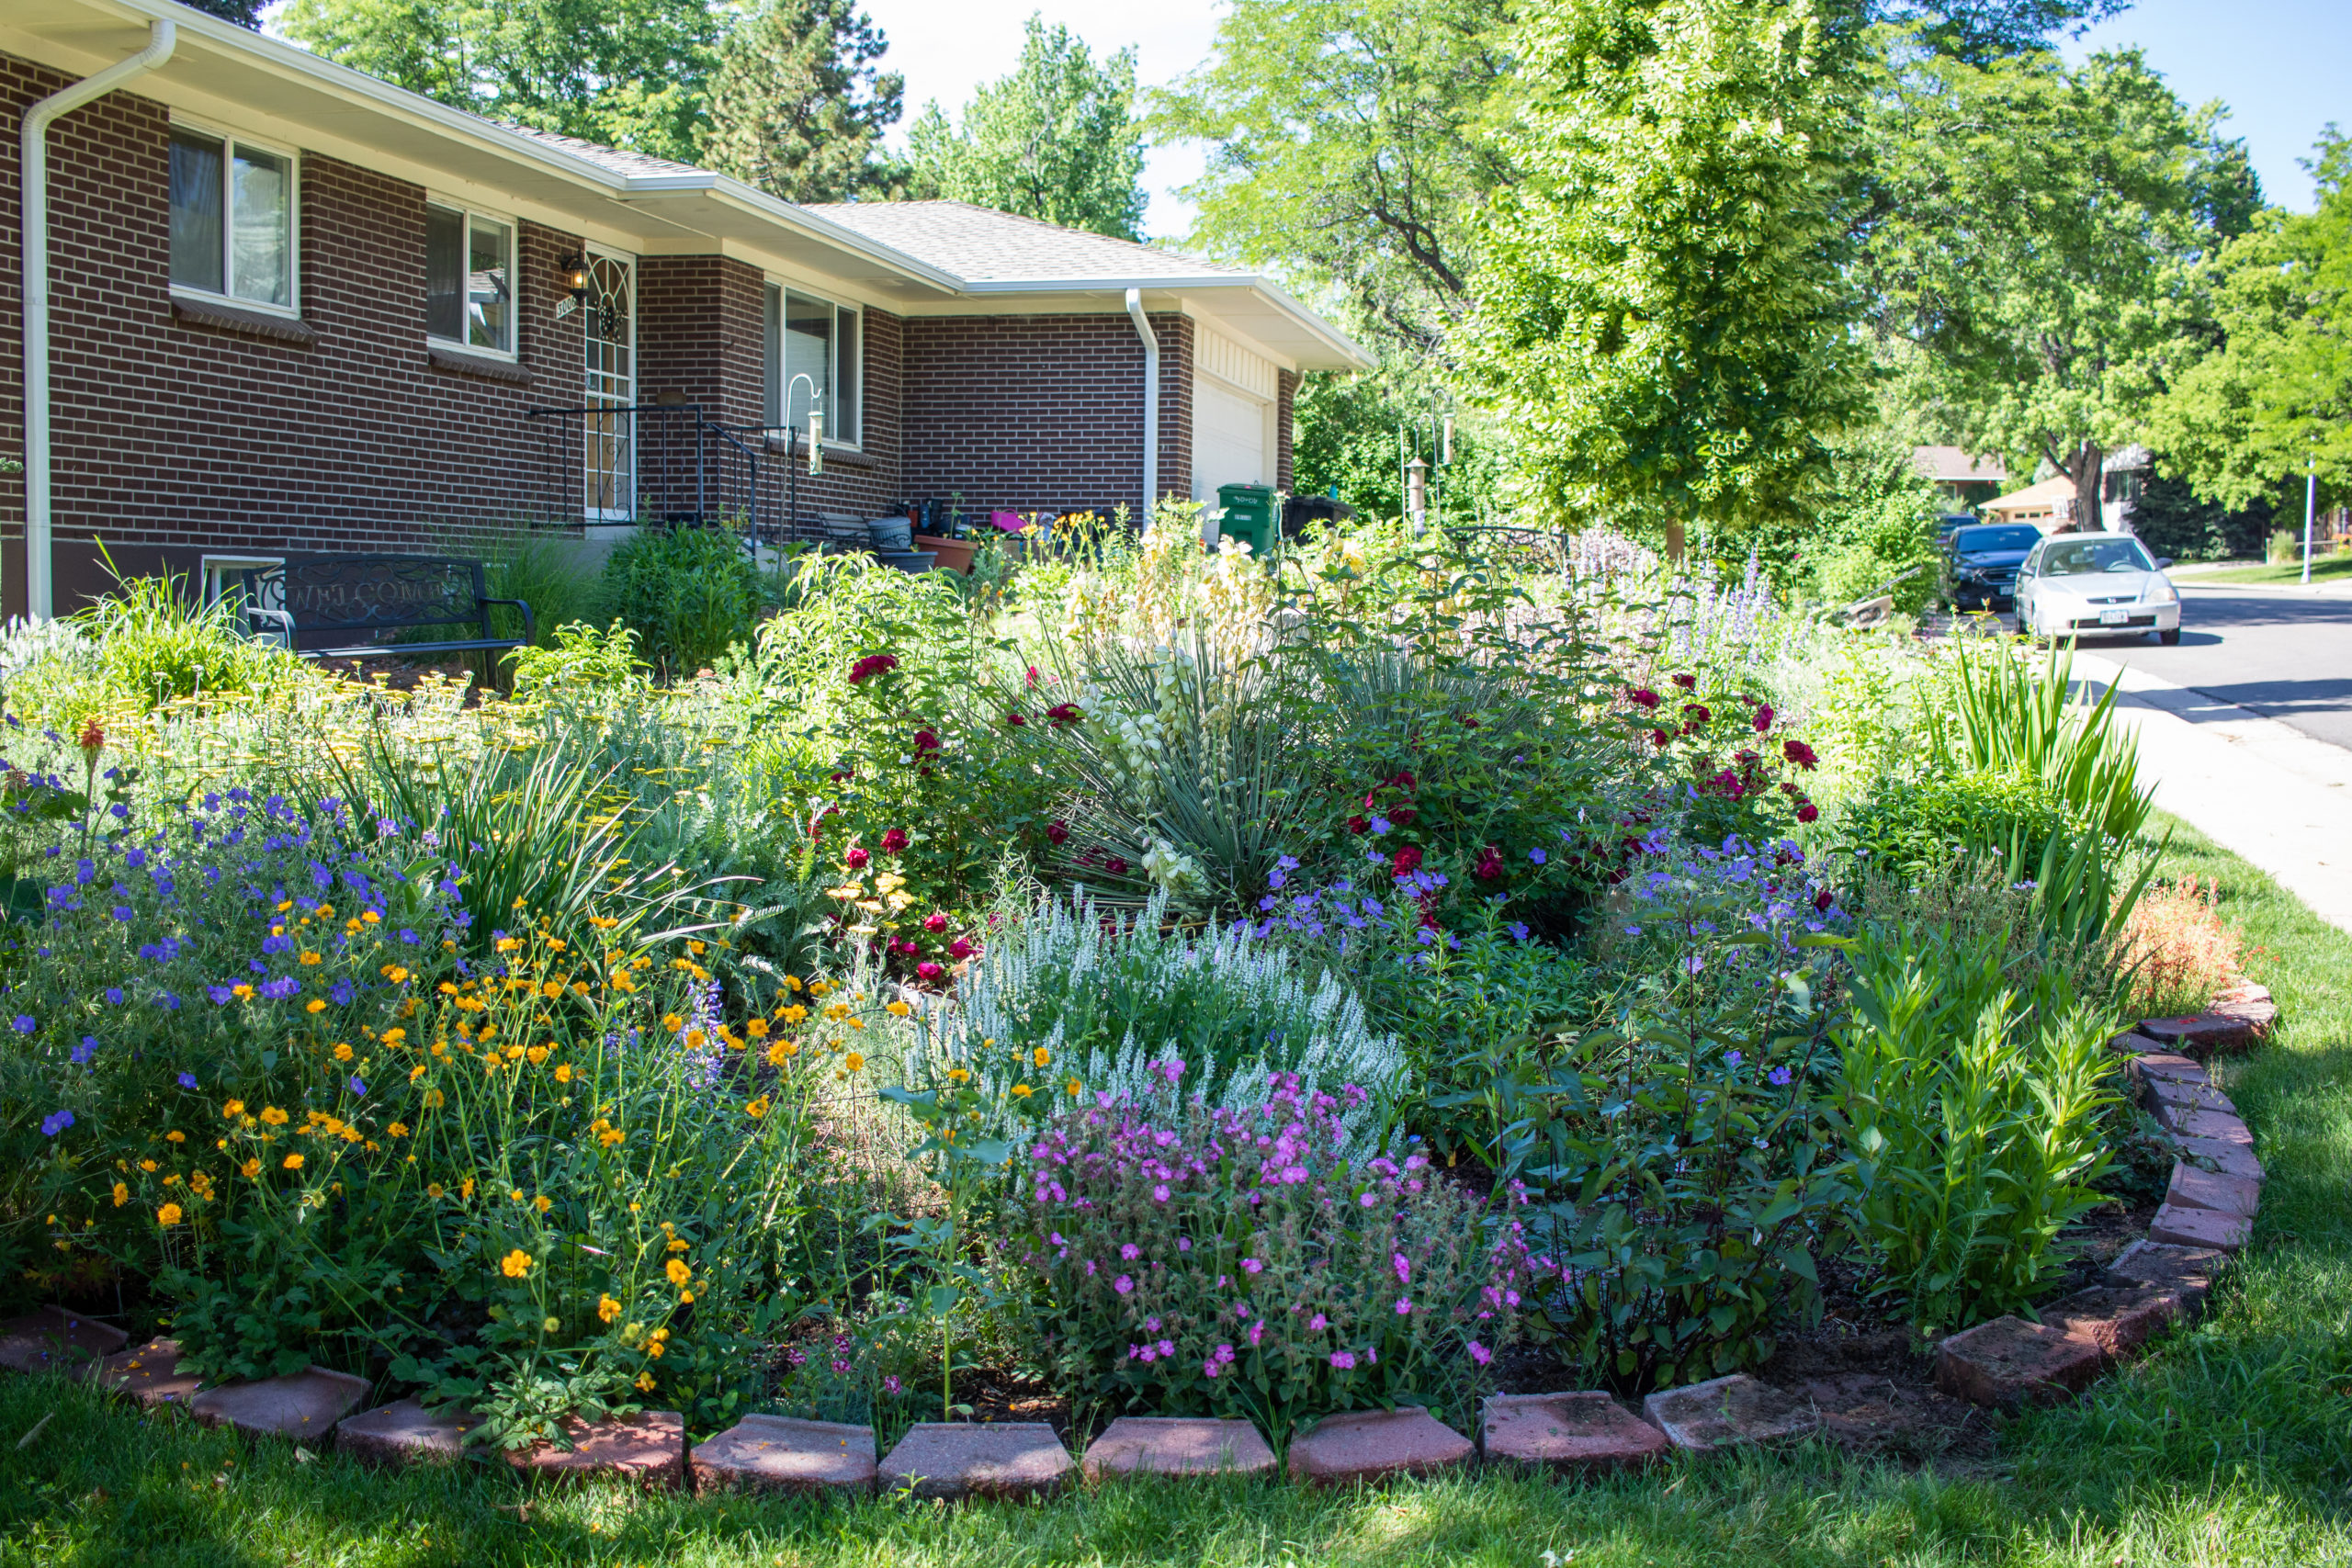 Blooming, full-grown garden in front yard